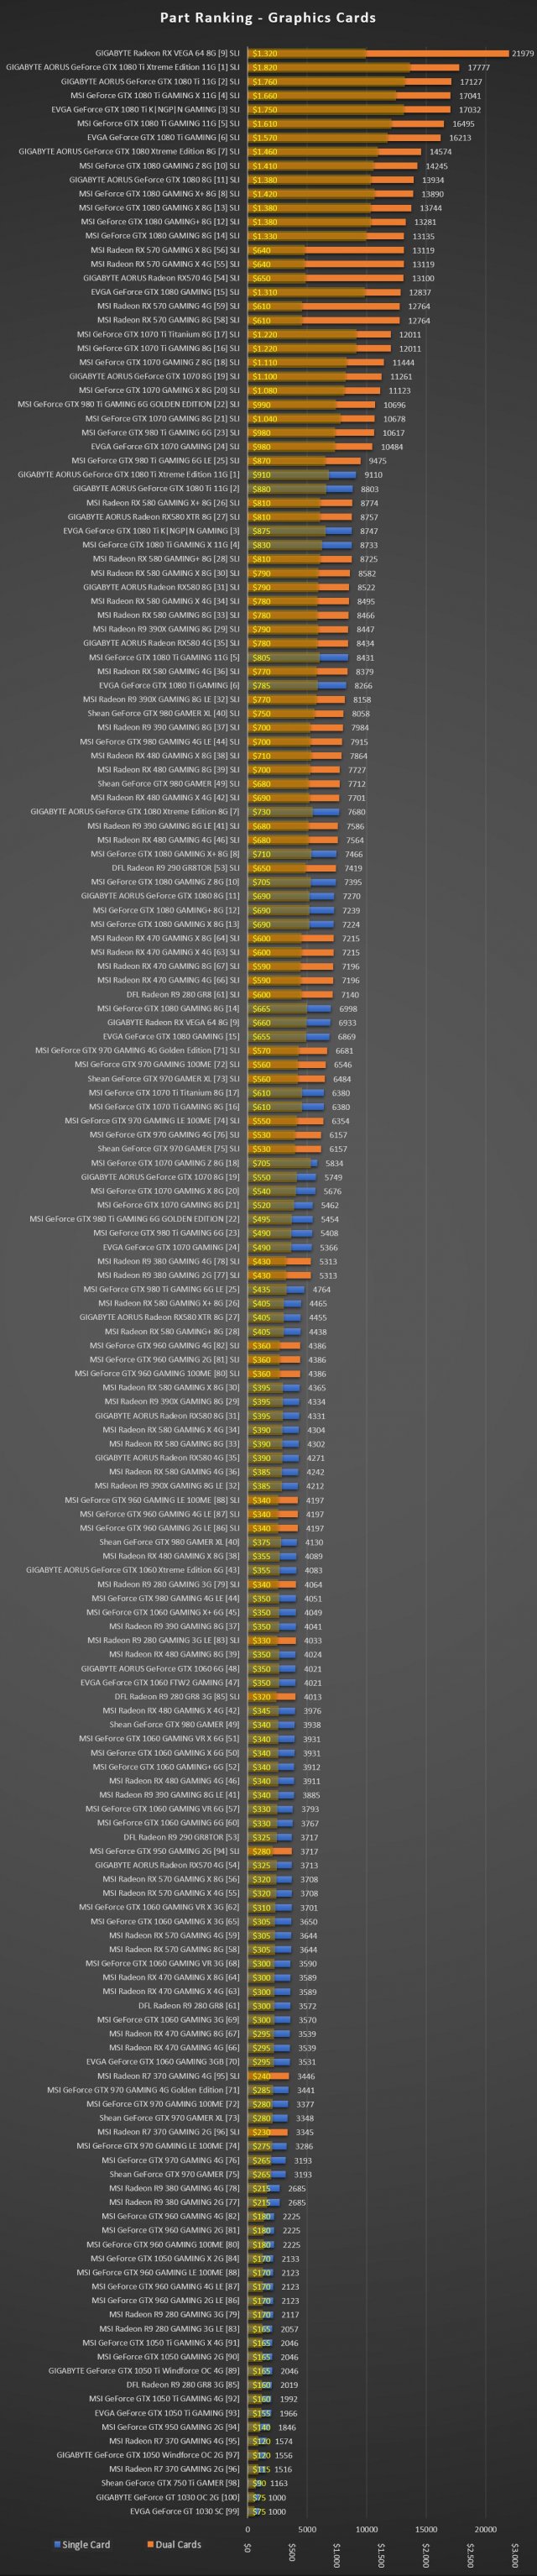 PC Building Simulator - Part Ranking Graphs image 5